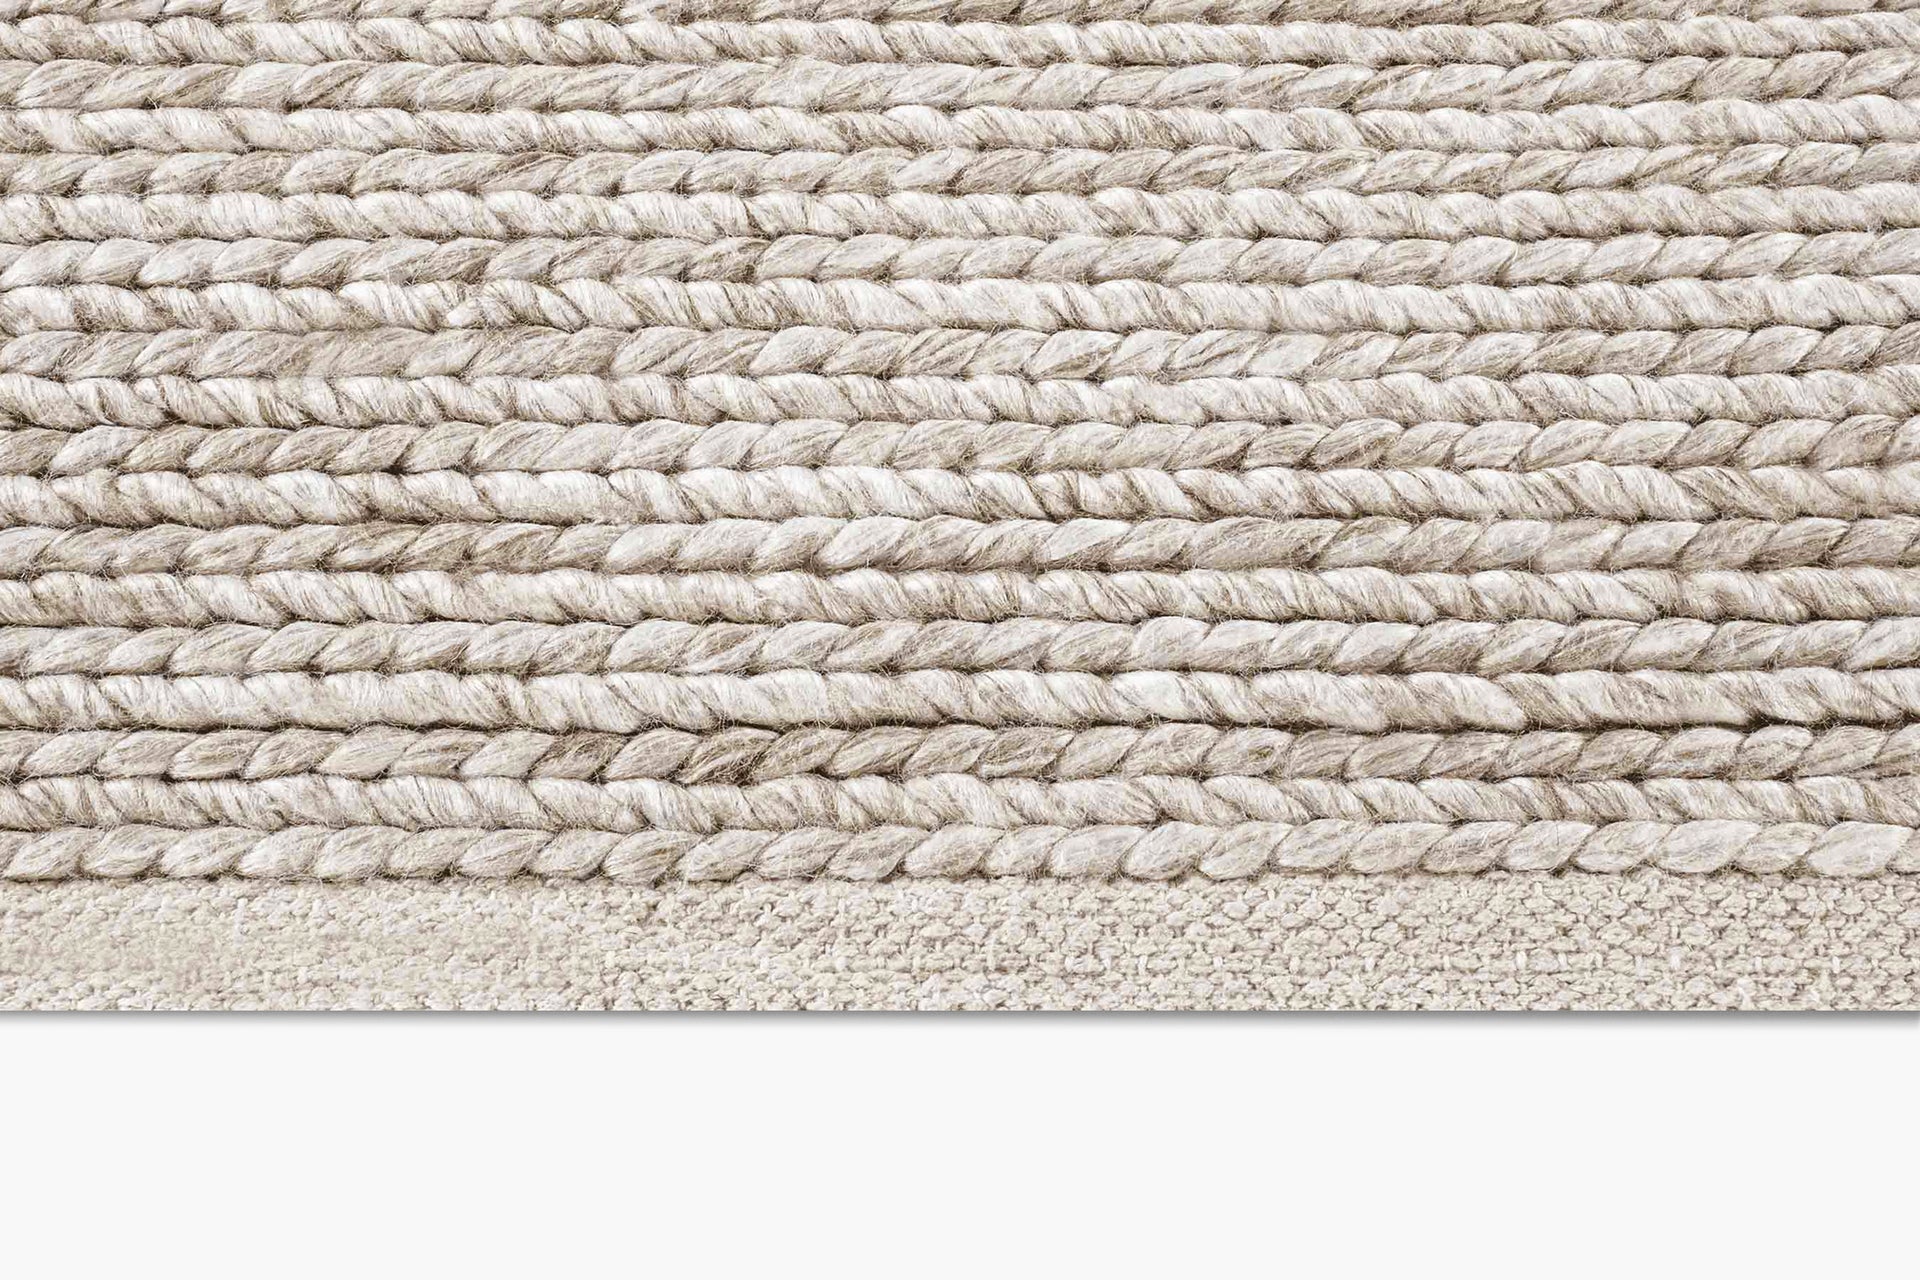 Braided Wool Rug – Marled